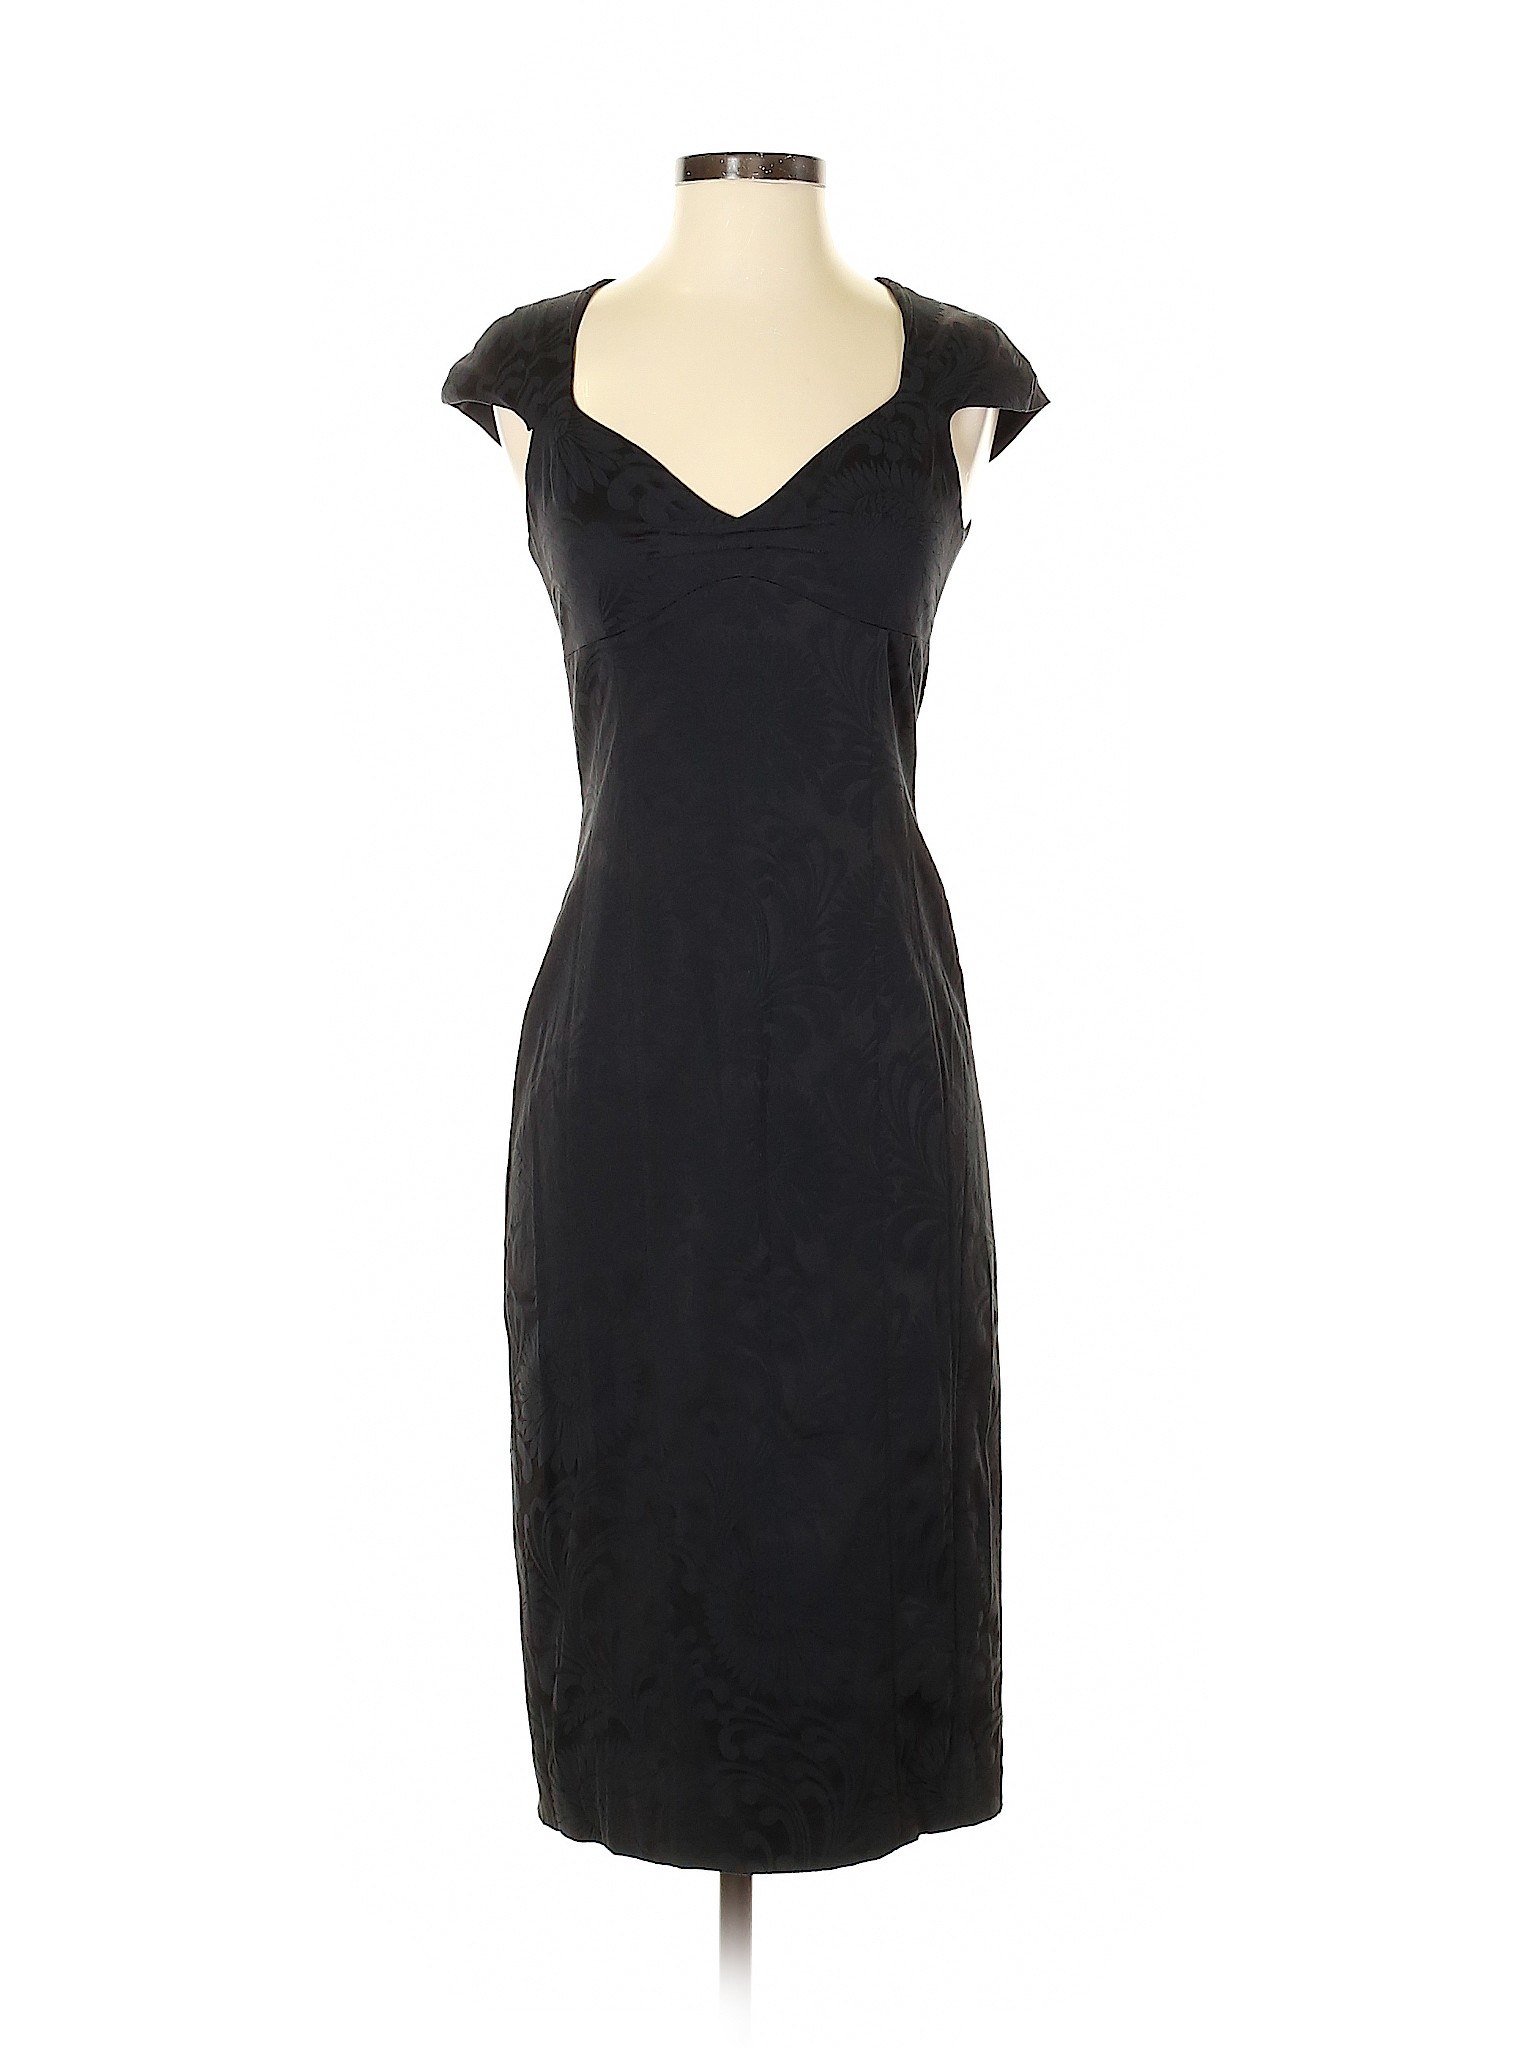 Michael Kors Women Black Casual Dress 2 | eBay